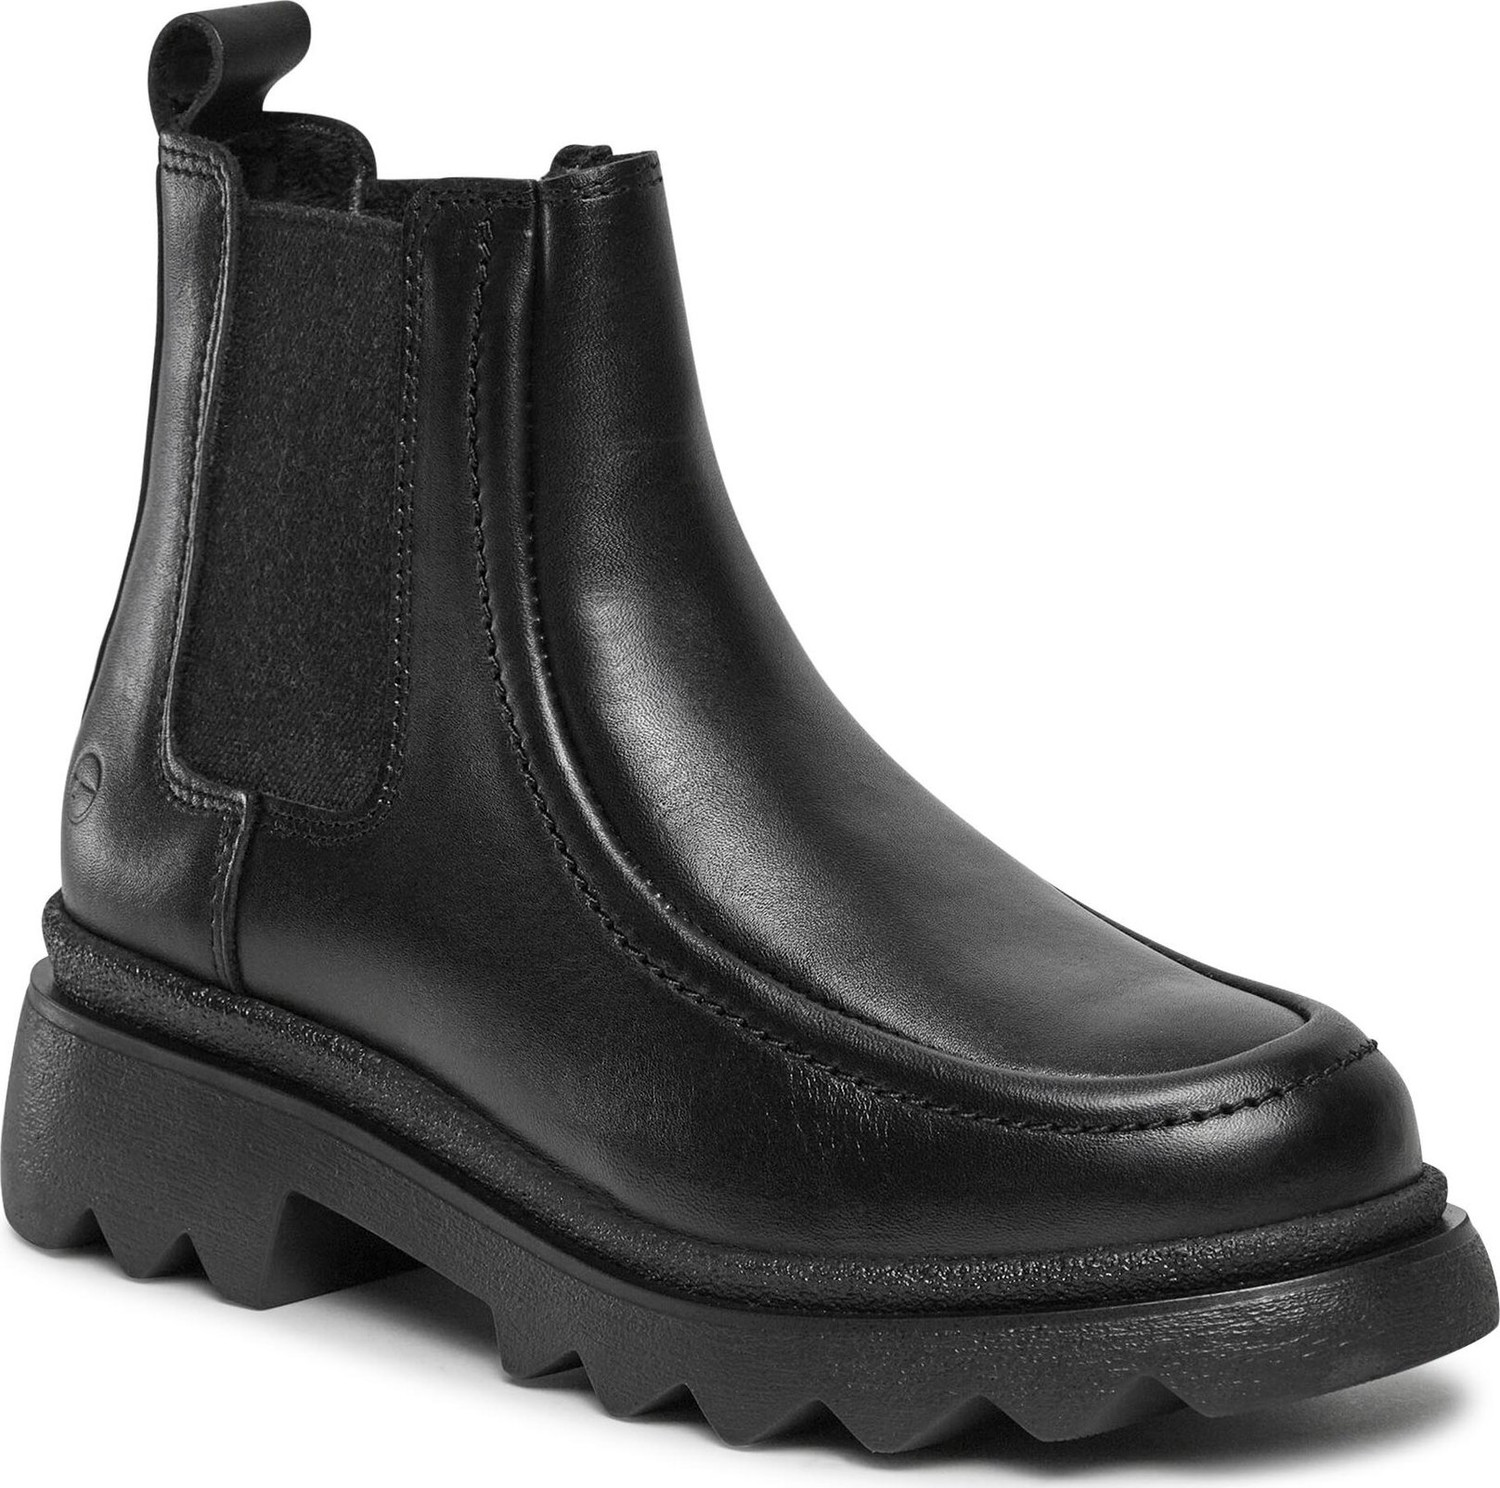 Kotníková obuv s elastickým prvkem Tamaris 1-25840-41 Black Leather 003